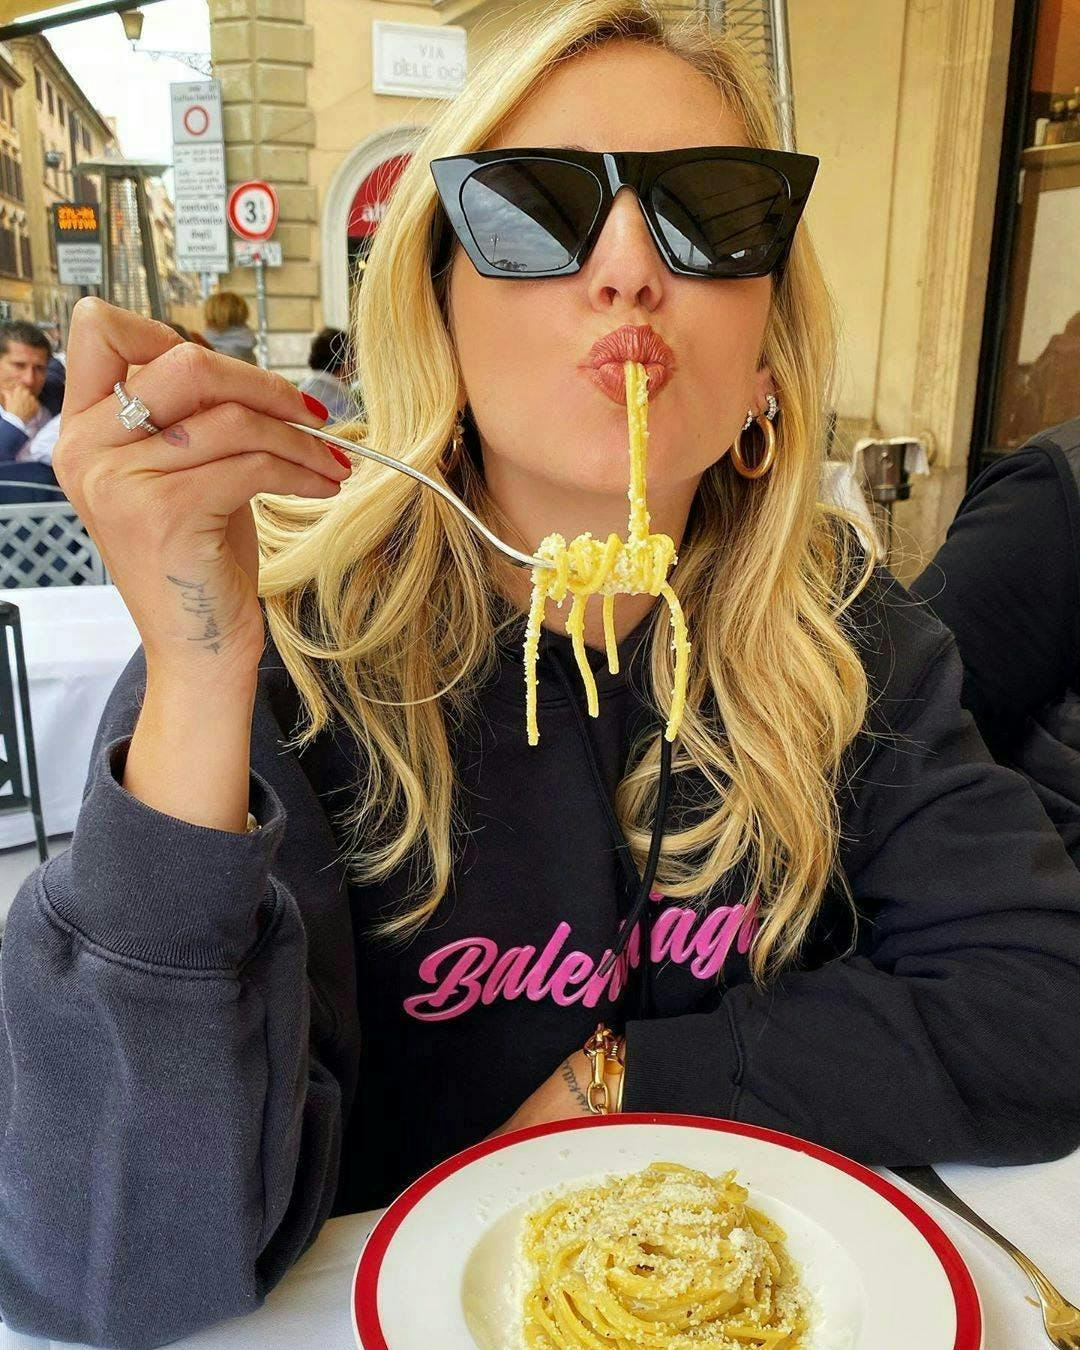 person human sunglasses accessories accessory noodle food pasta meal spaghetti